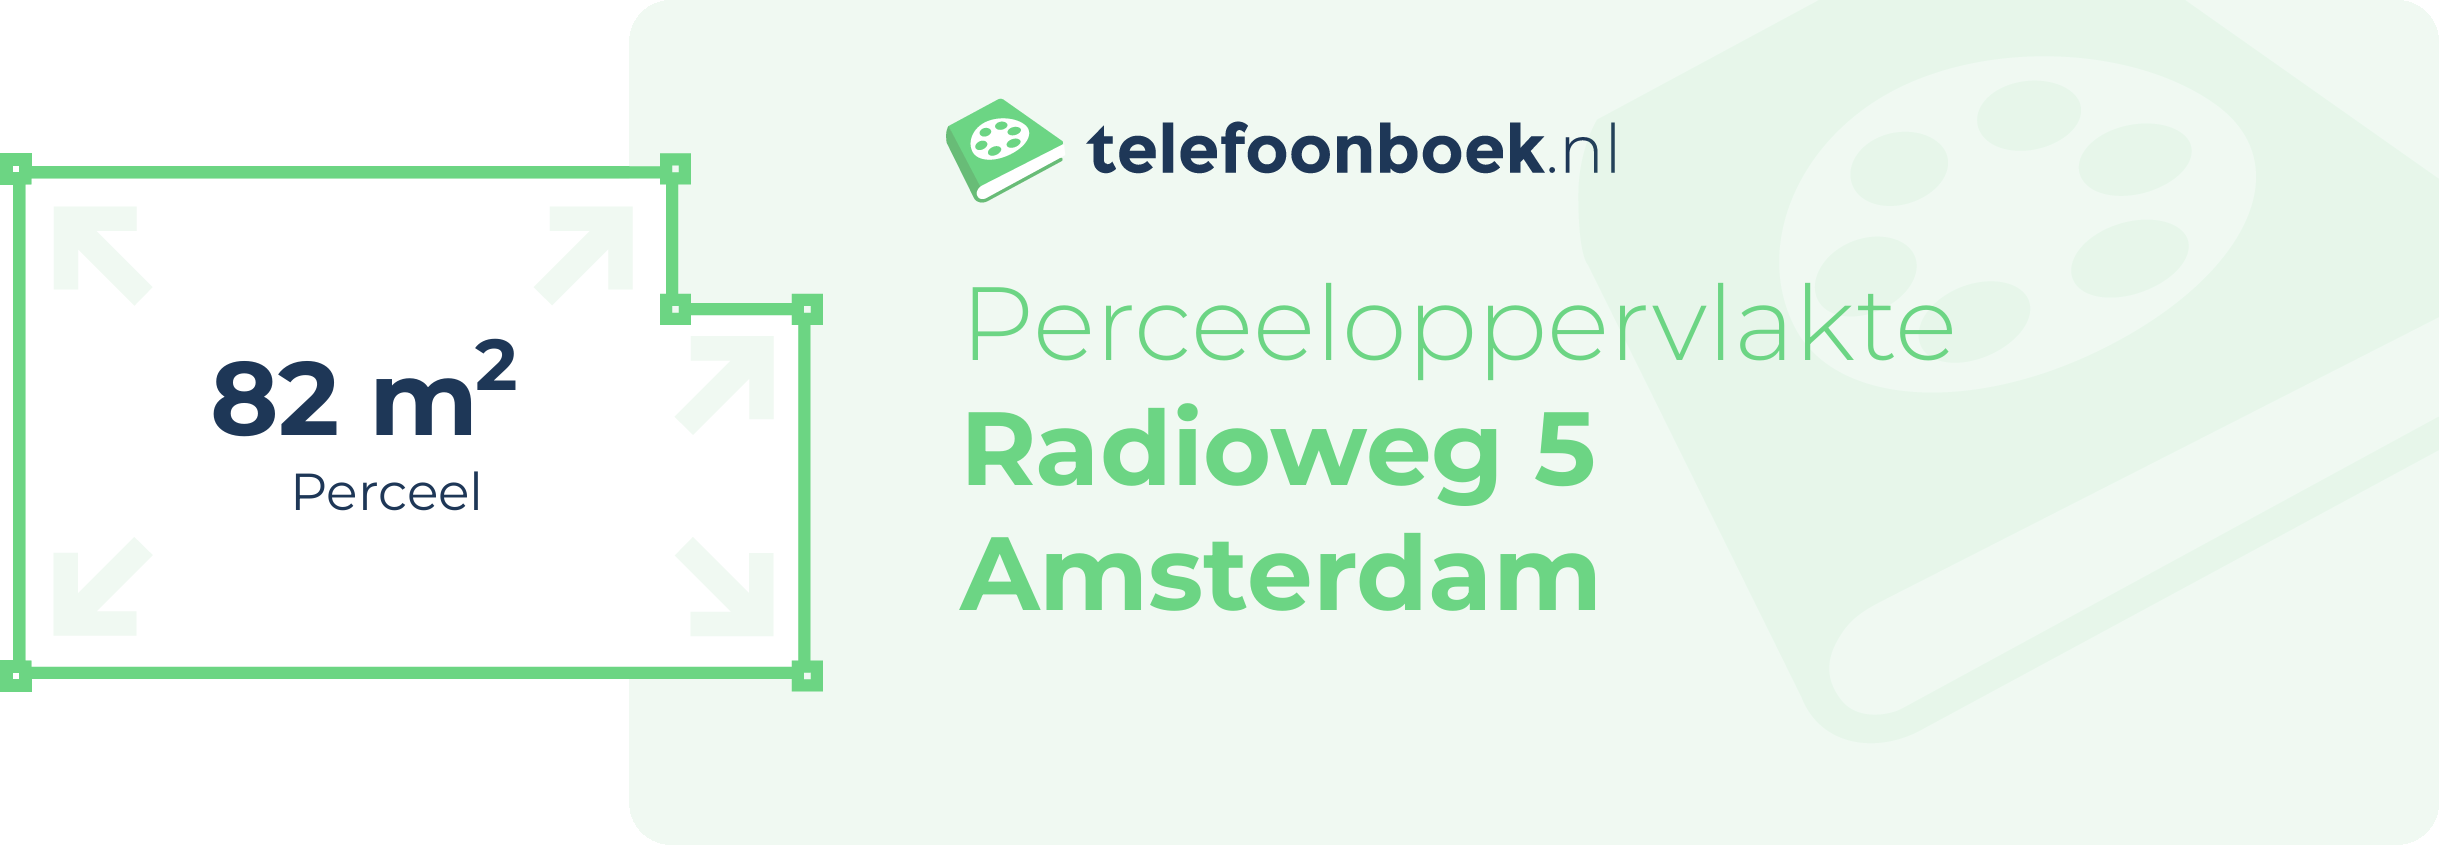 Perceeloppervlakte Radioweg 5 Amsterdam